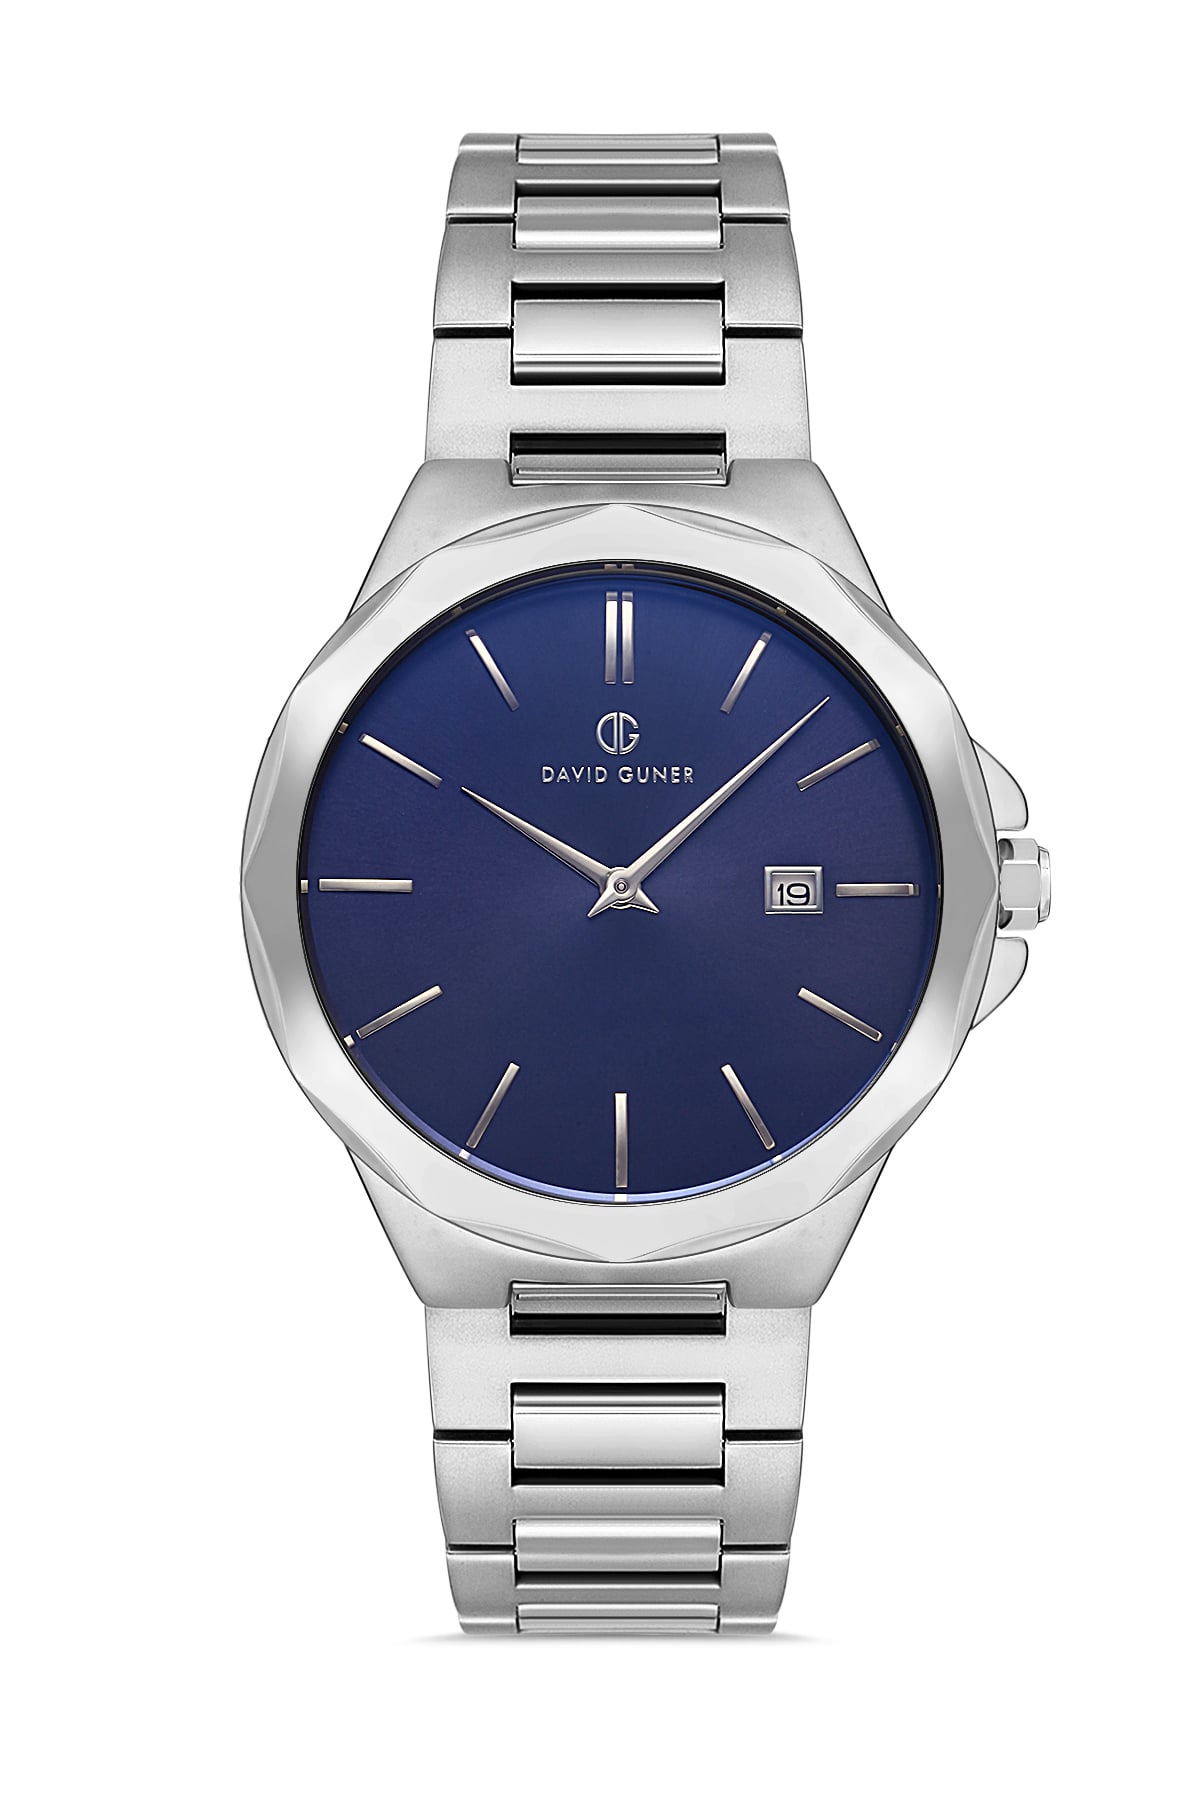 DAVID GUNER Men's Wristwatch with Dark Blue Dial and Silver Plated Calendar